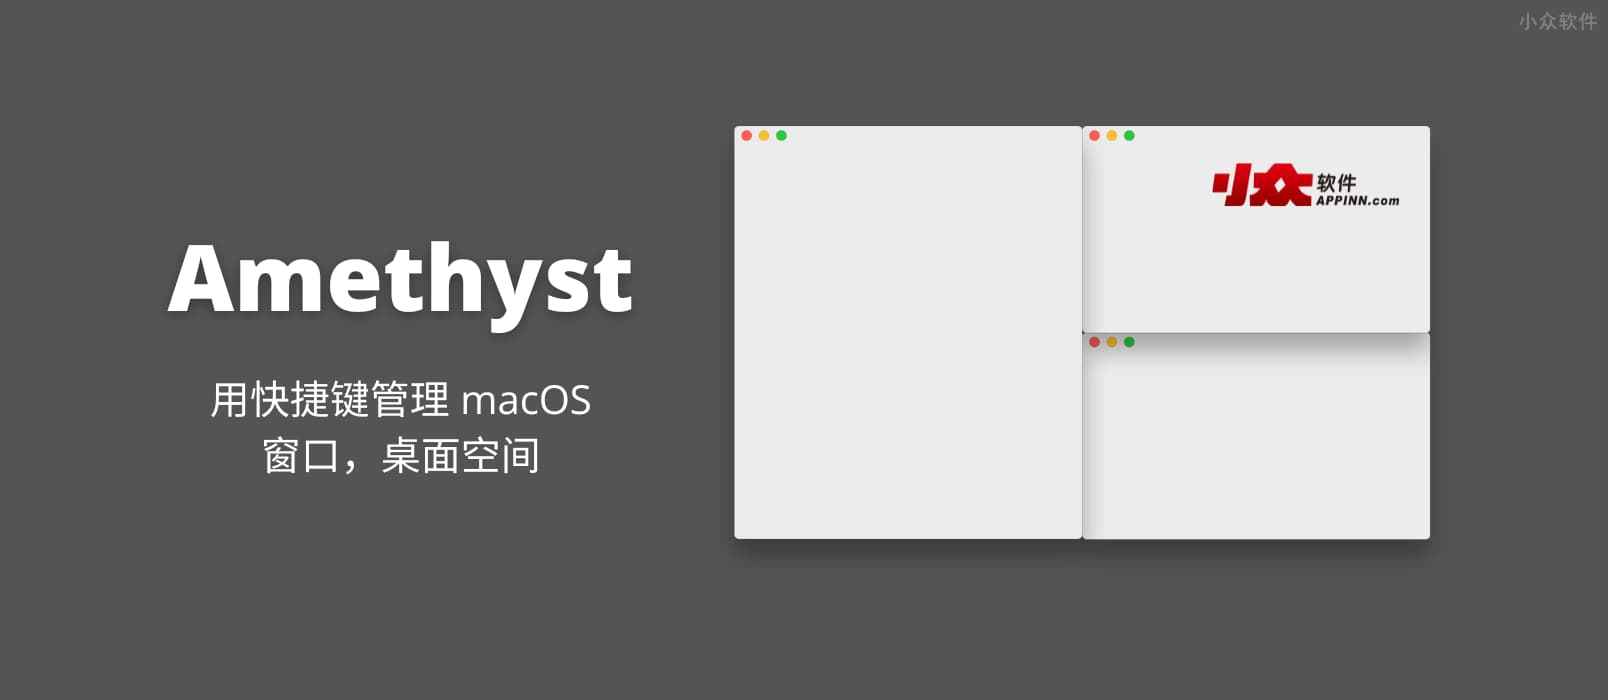 Amethyst – 平铺式窗口自动布局工具，用快捷键管理 macOS 窗口，桌面空间